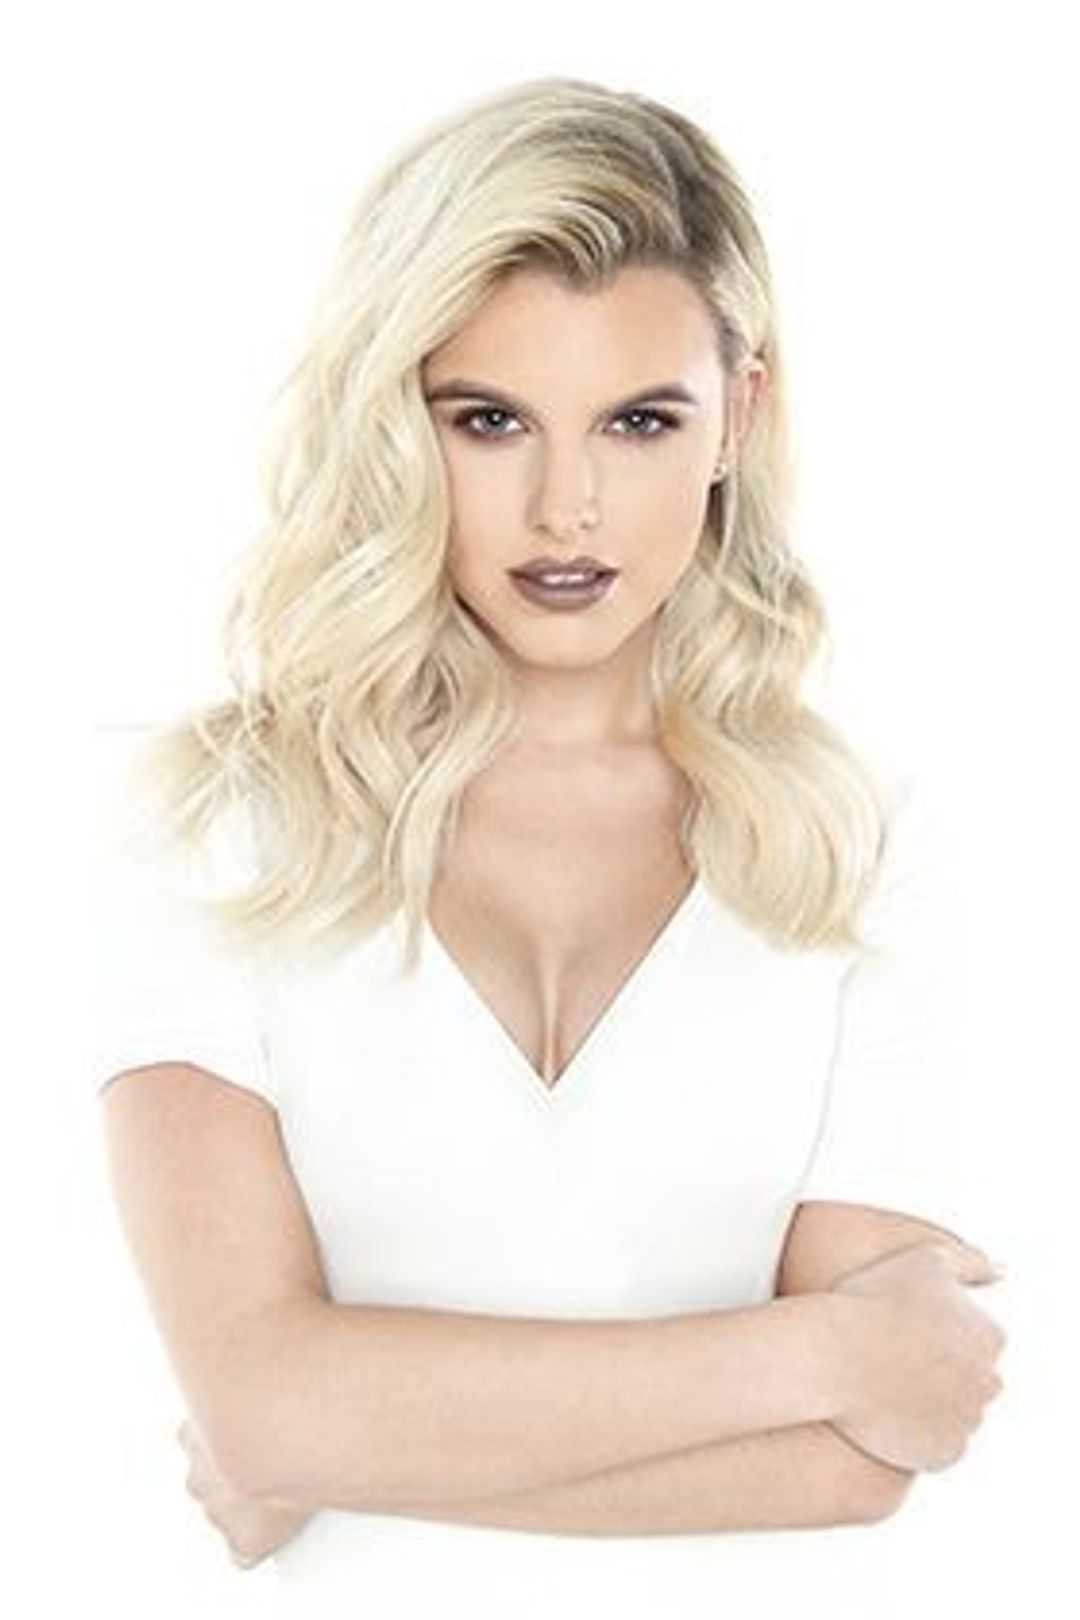 Beauty Works Celebrity Choice® Slim-Line Tape - Scandinavian Blonde,14"